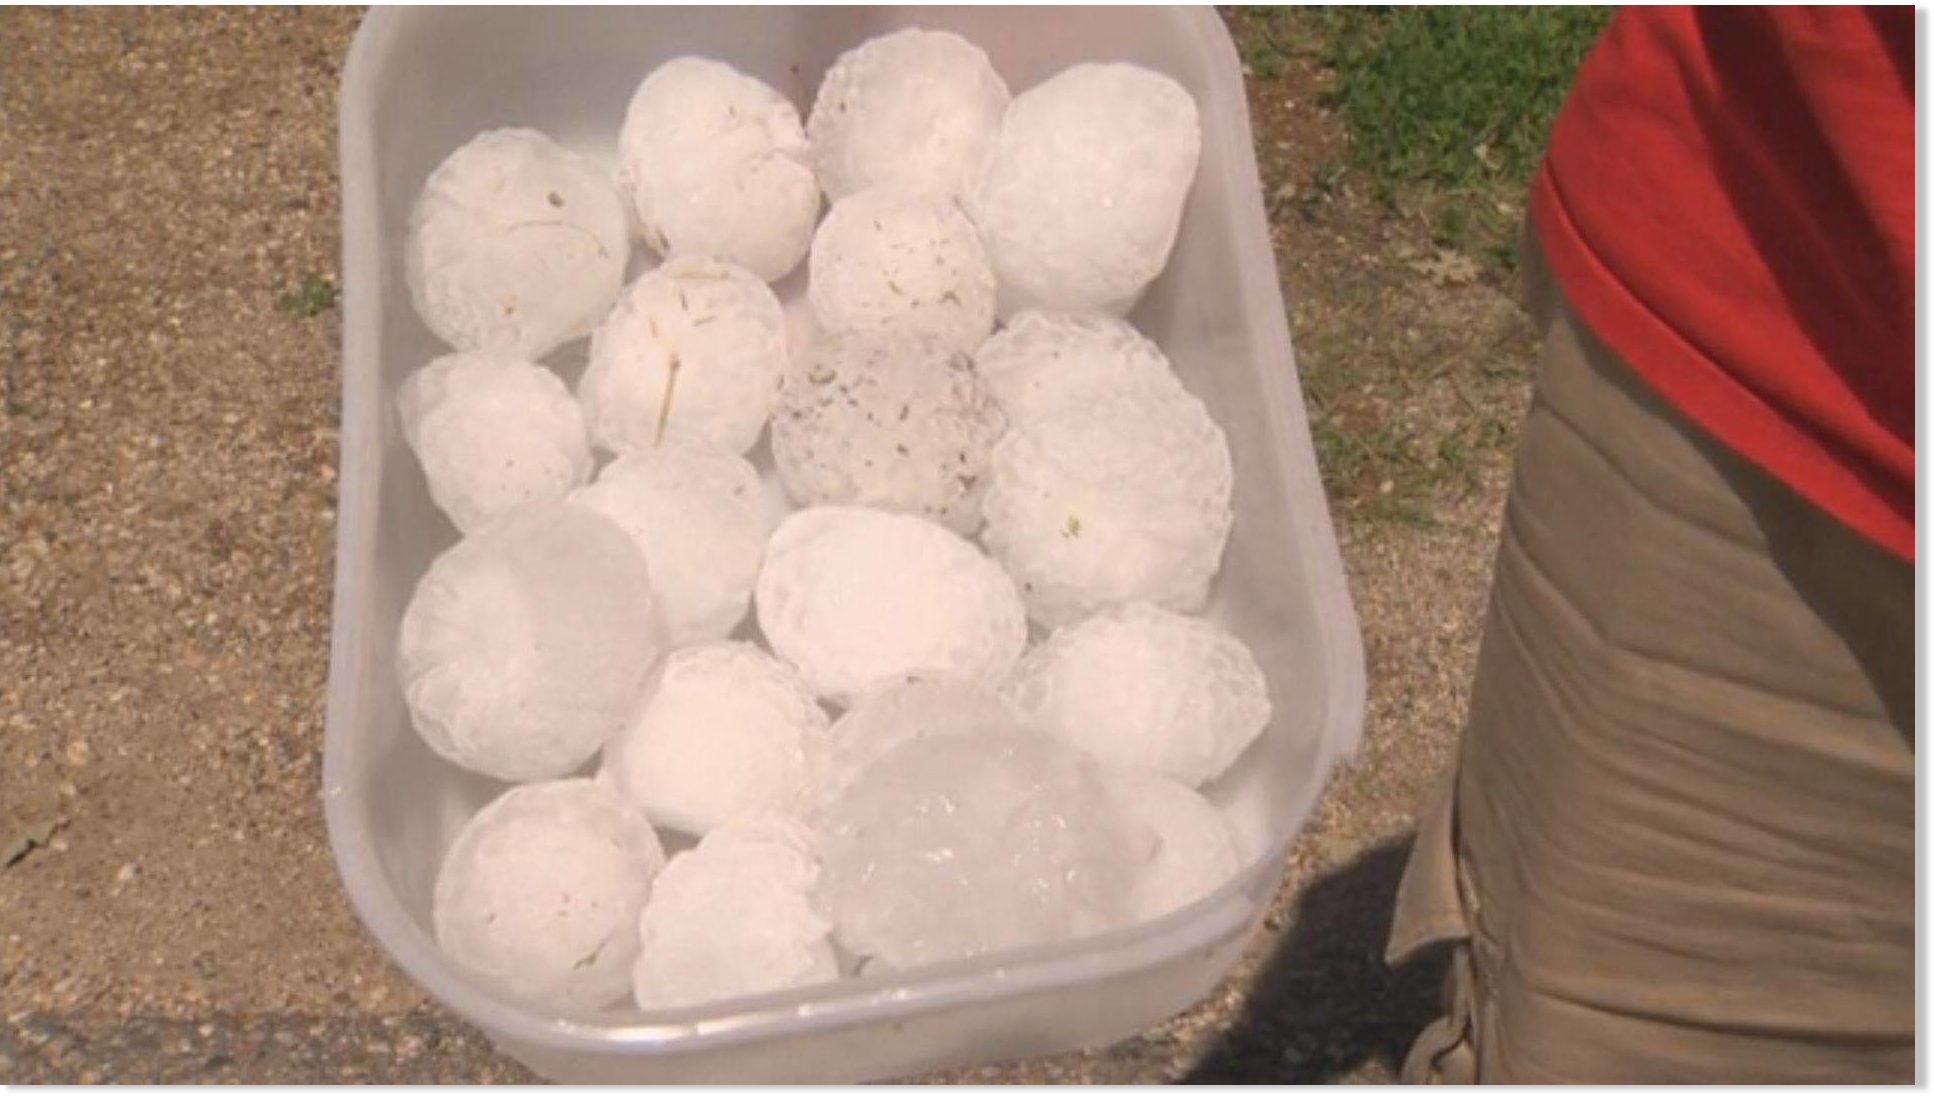 Baseballsized hail recorded in Manitoba and Saskatchewan Earth